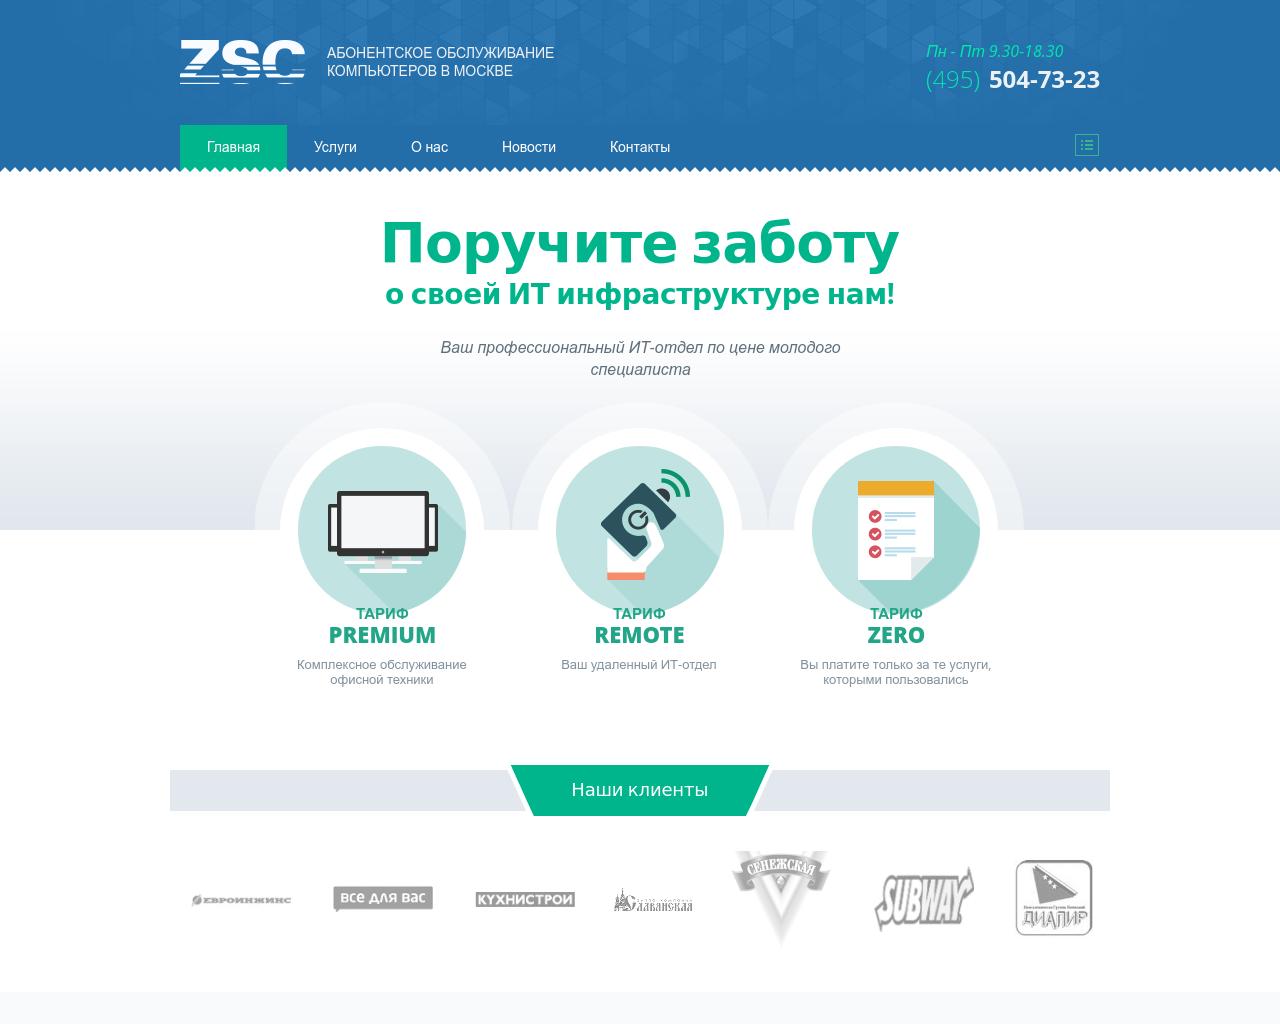 Изображение сайта zscomp.ru в разрешении 1280x1024